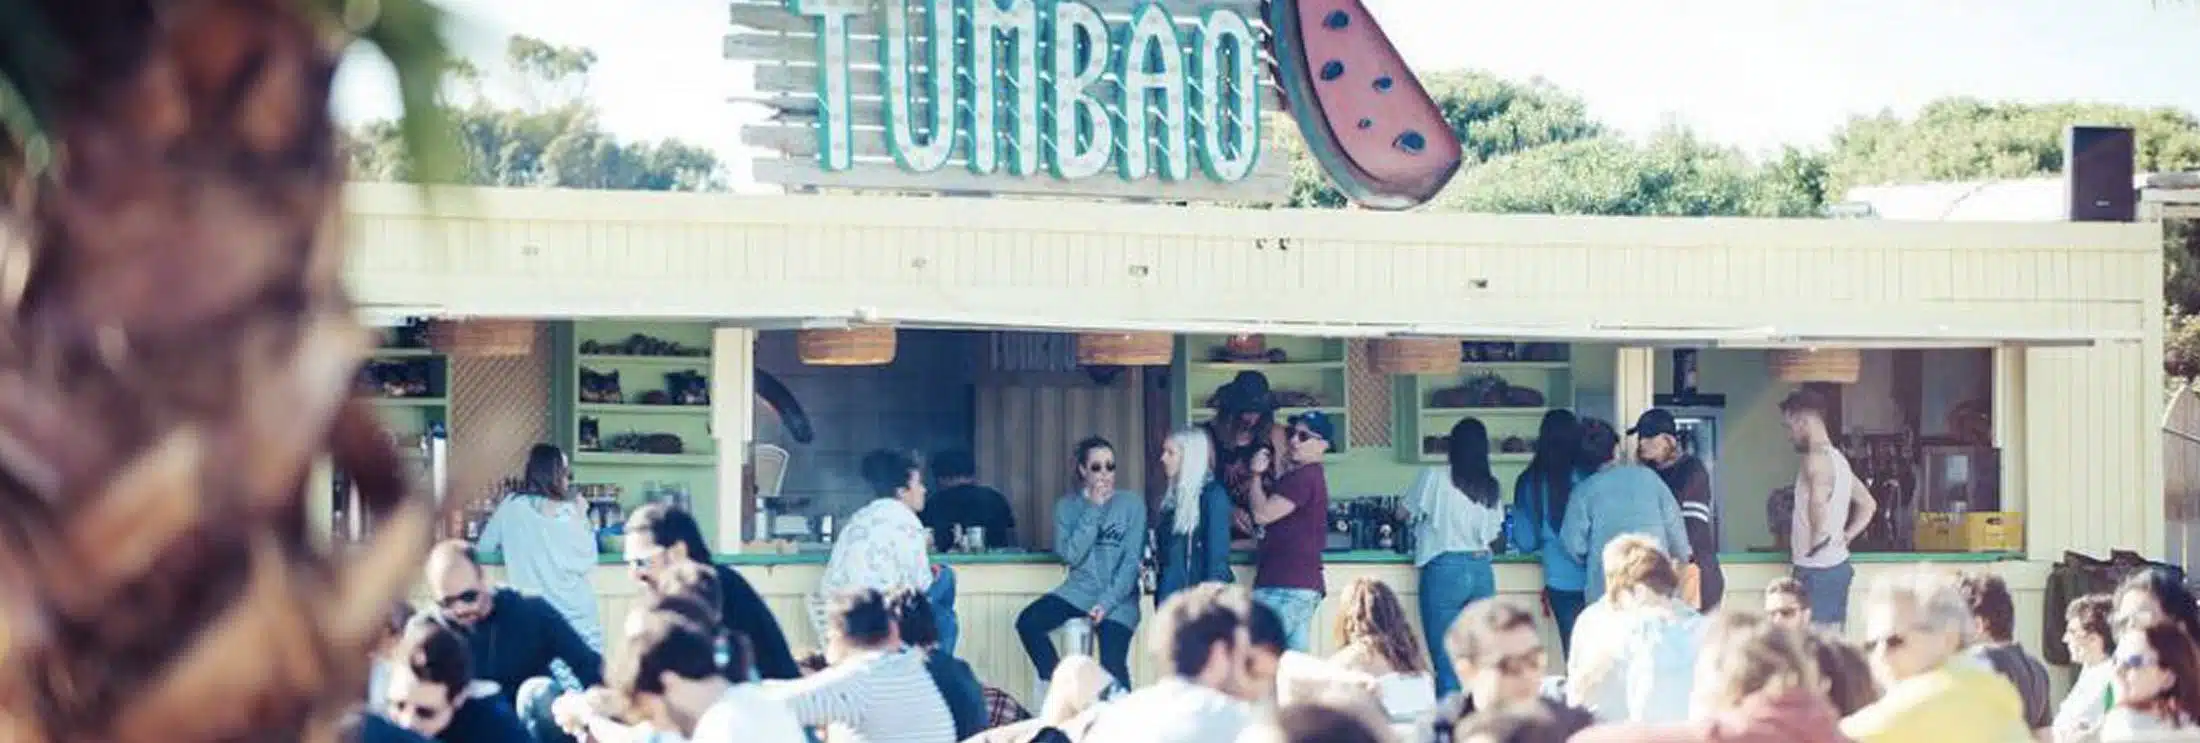 Tumbao beach bar where to party in summer in Tarifa